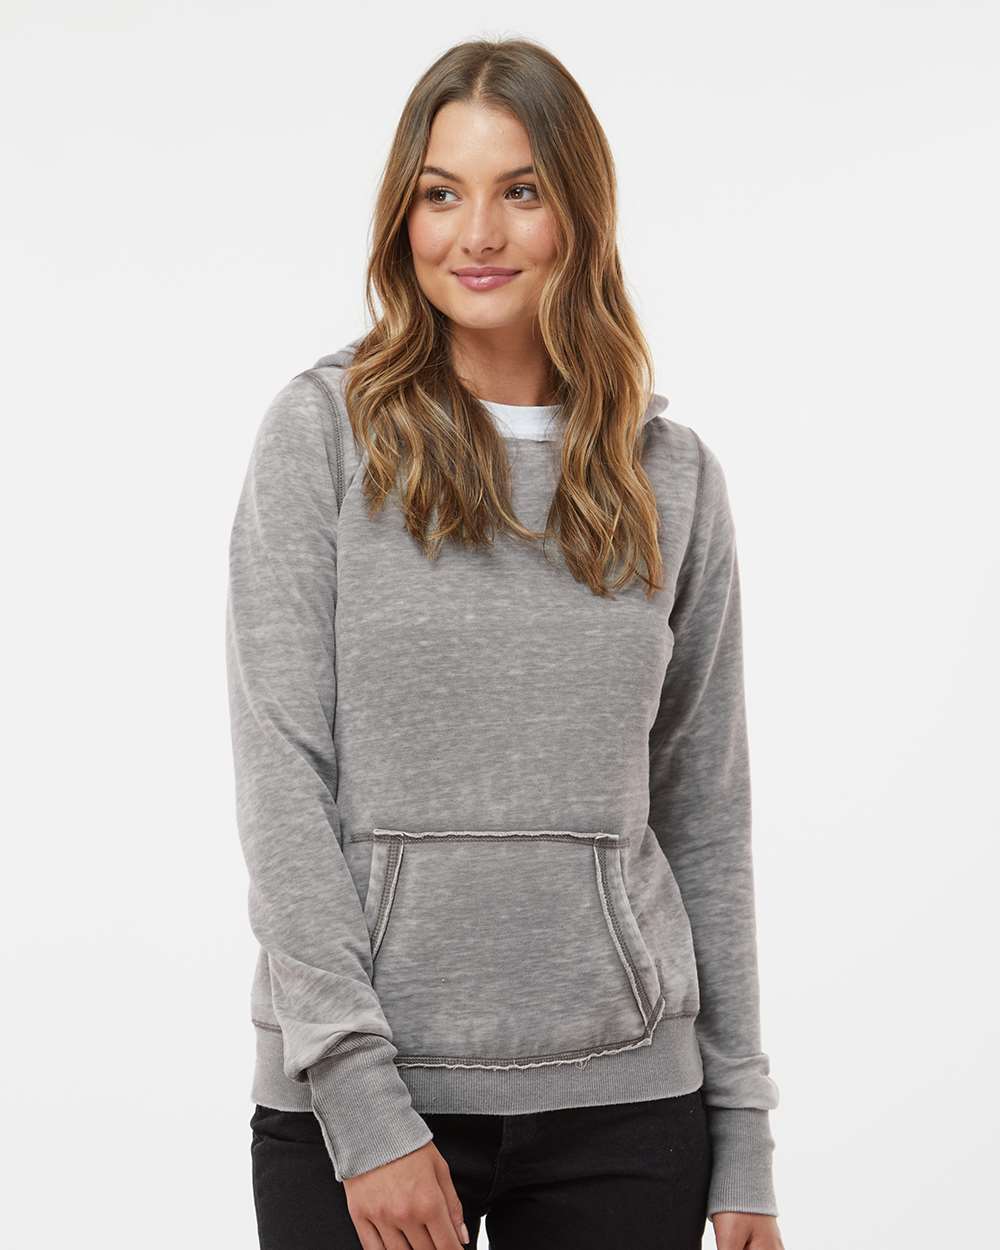 J. America 8912 - Women's Zen Fleece Hooded Sweatshirt